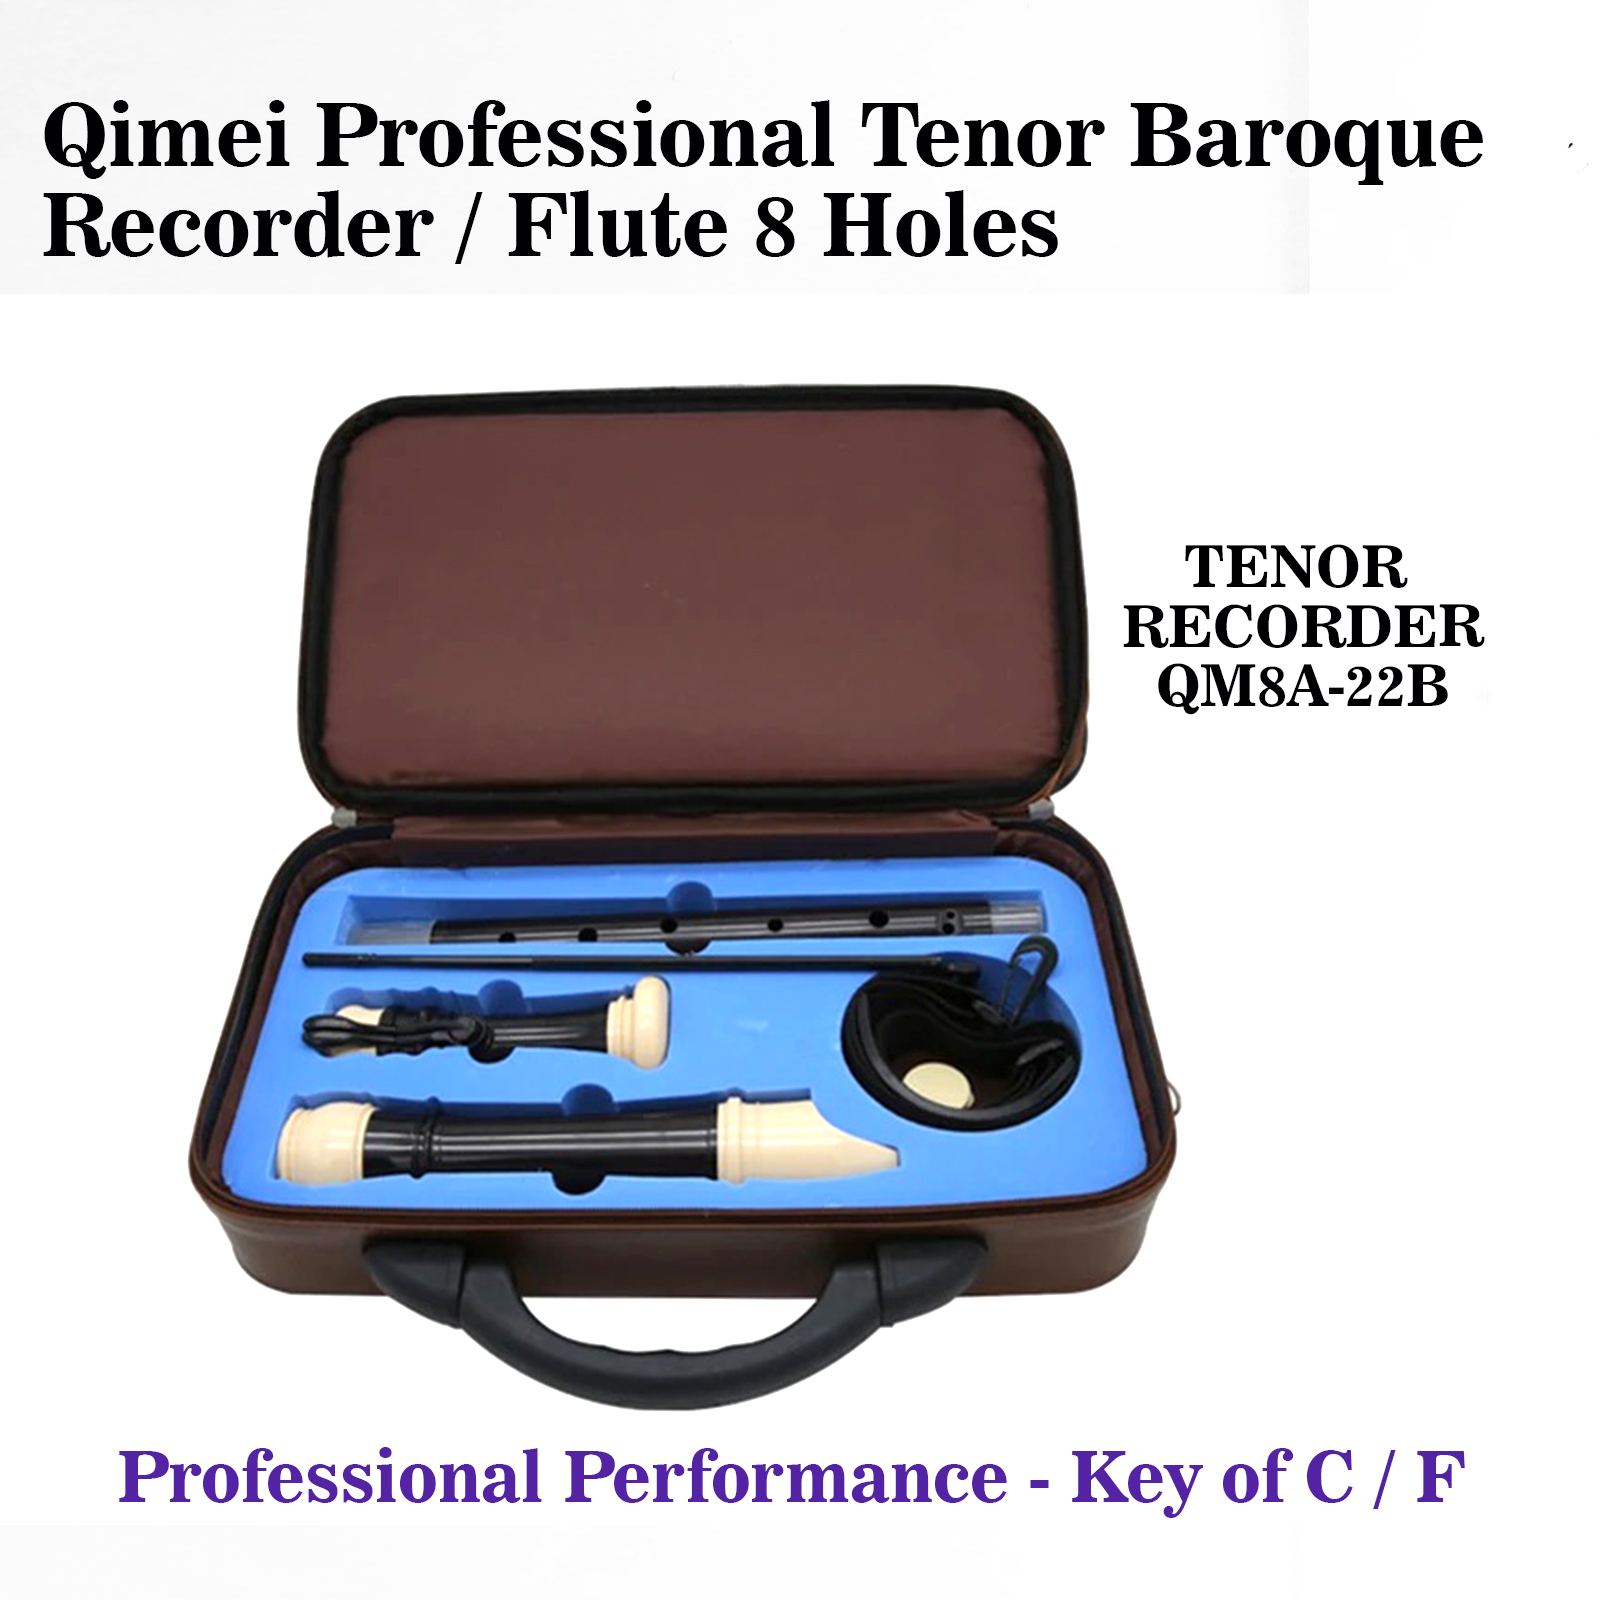 Qimei Professional Tenor Baroque Recorder Flute 8 Holes - Key of C / F QM8A-22B